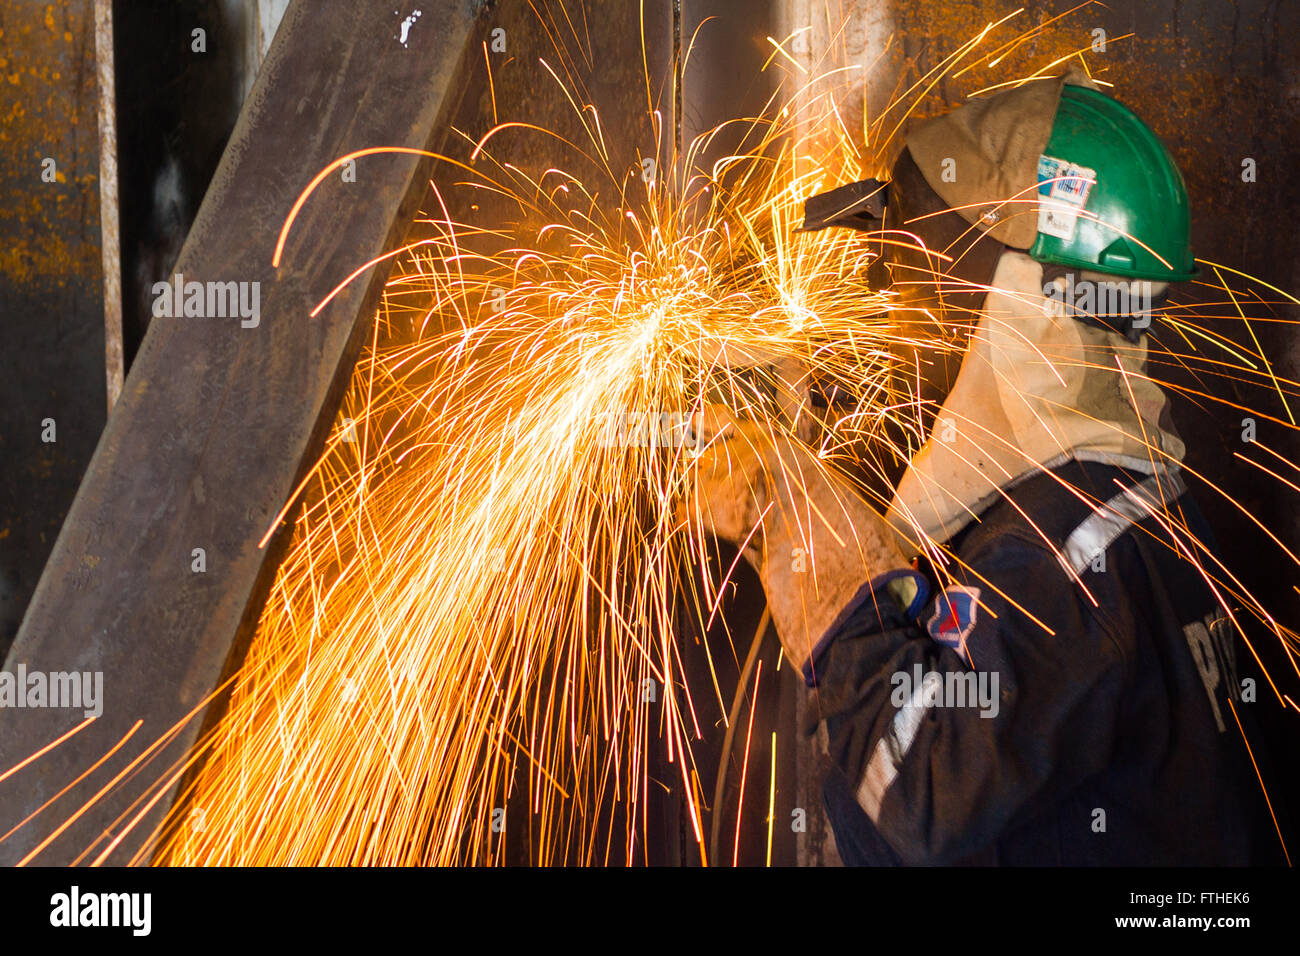 Man welding on oil rig Stock Photo